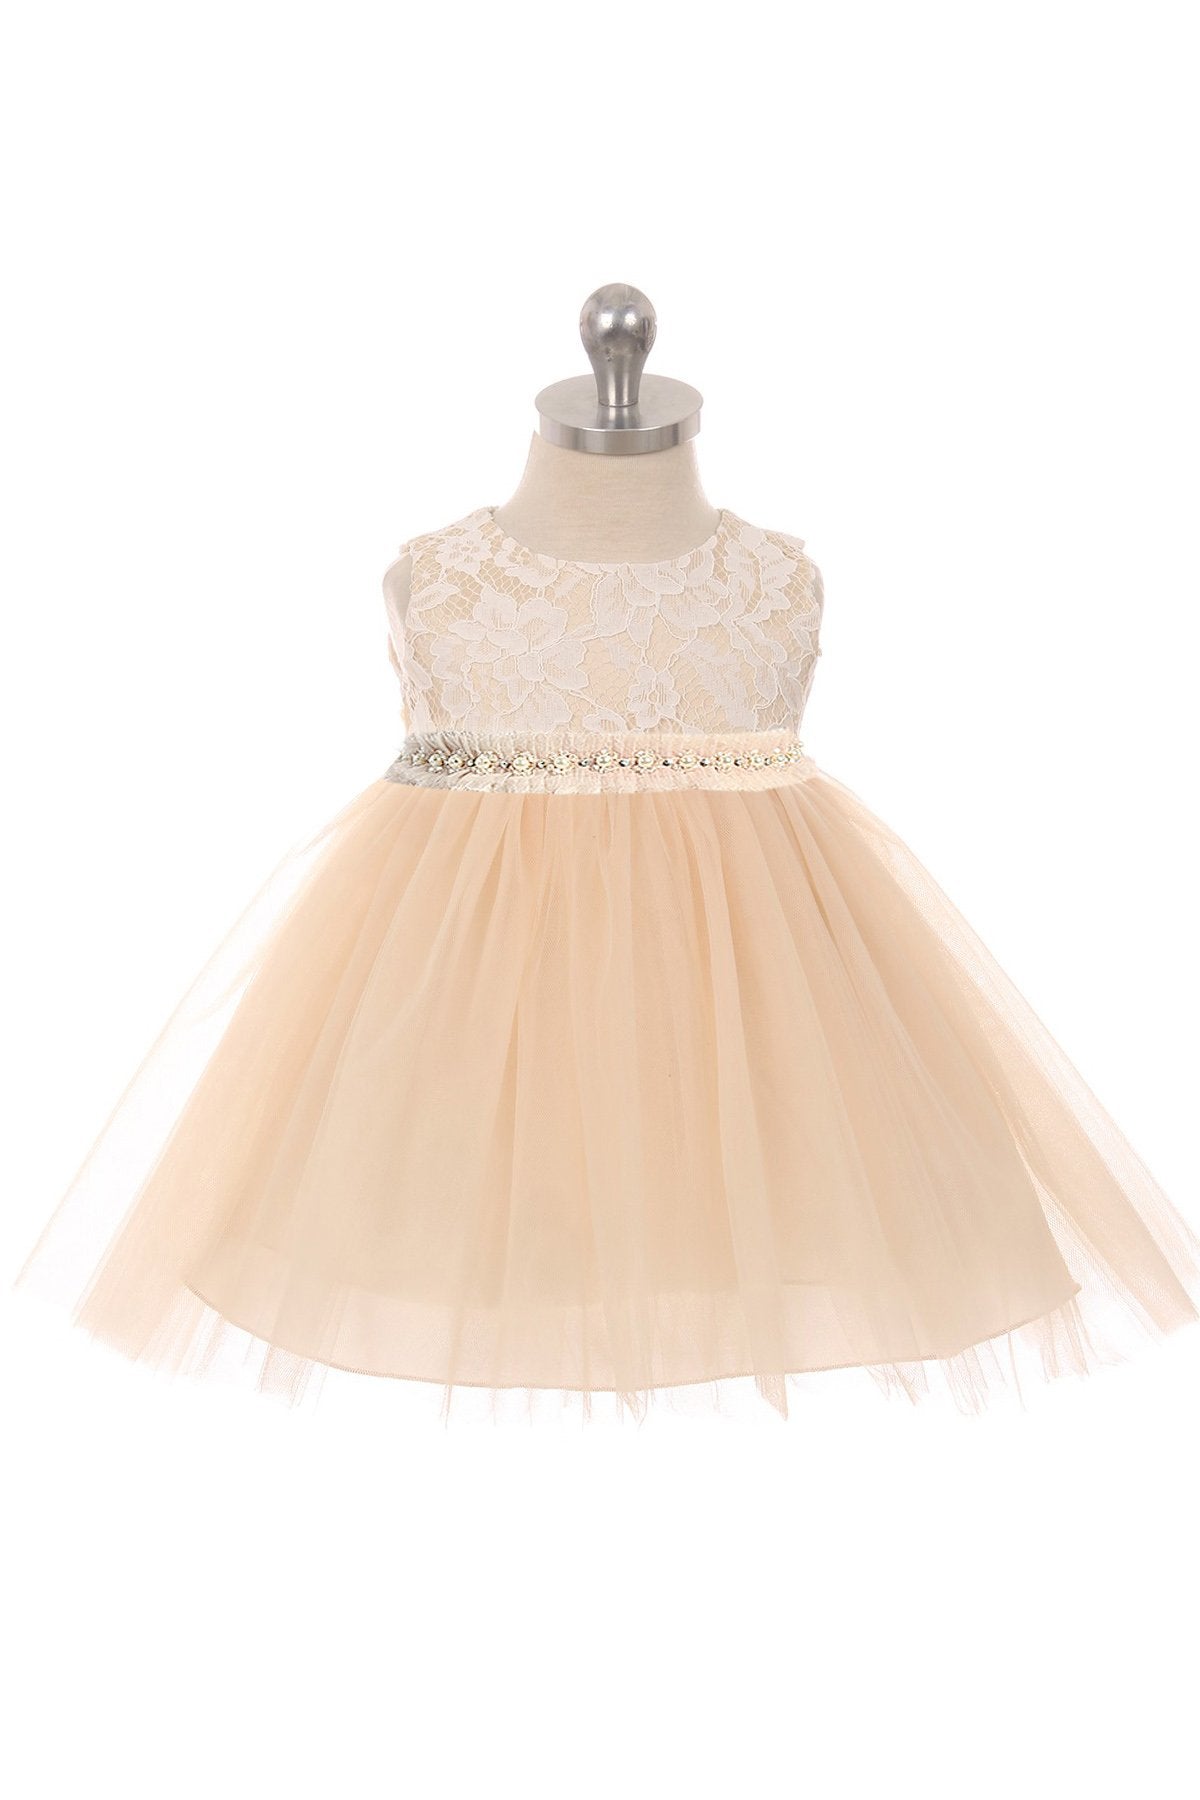 Dress - Lace Baby Dress W/ Mesh Pearl Trim